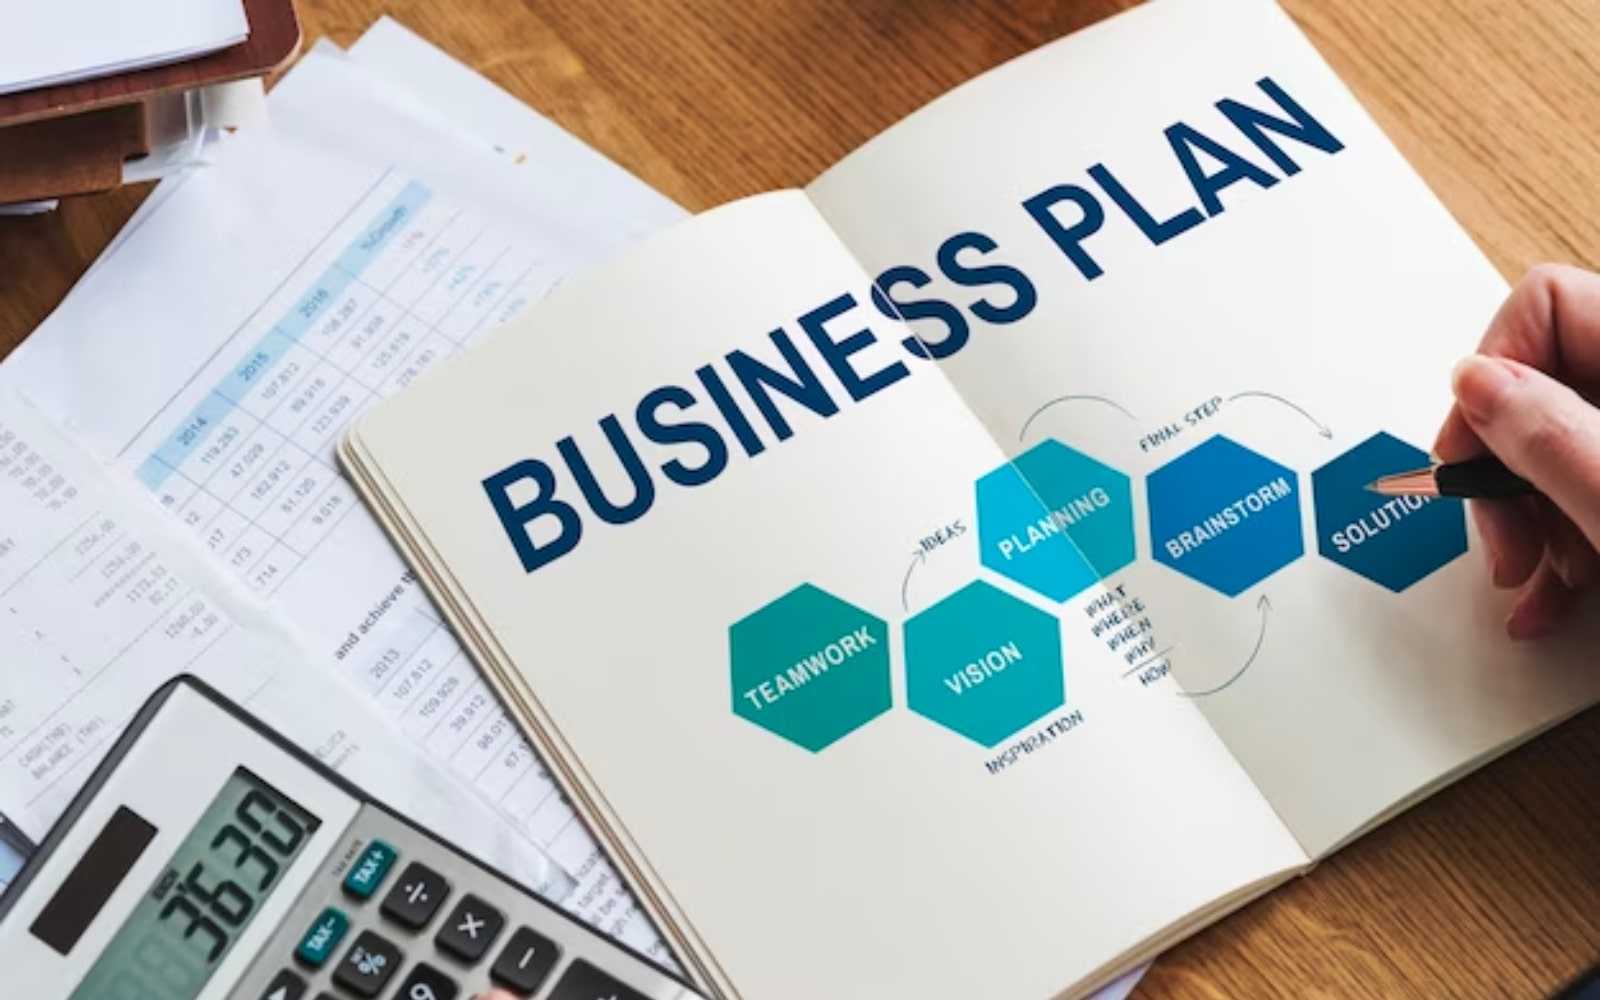 Step 2: Create a business plan